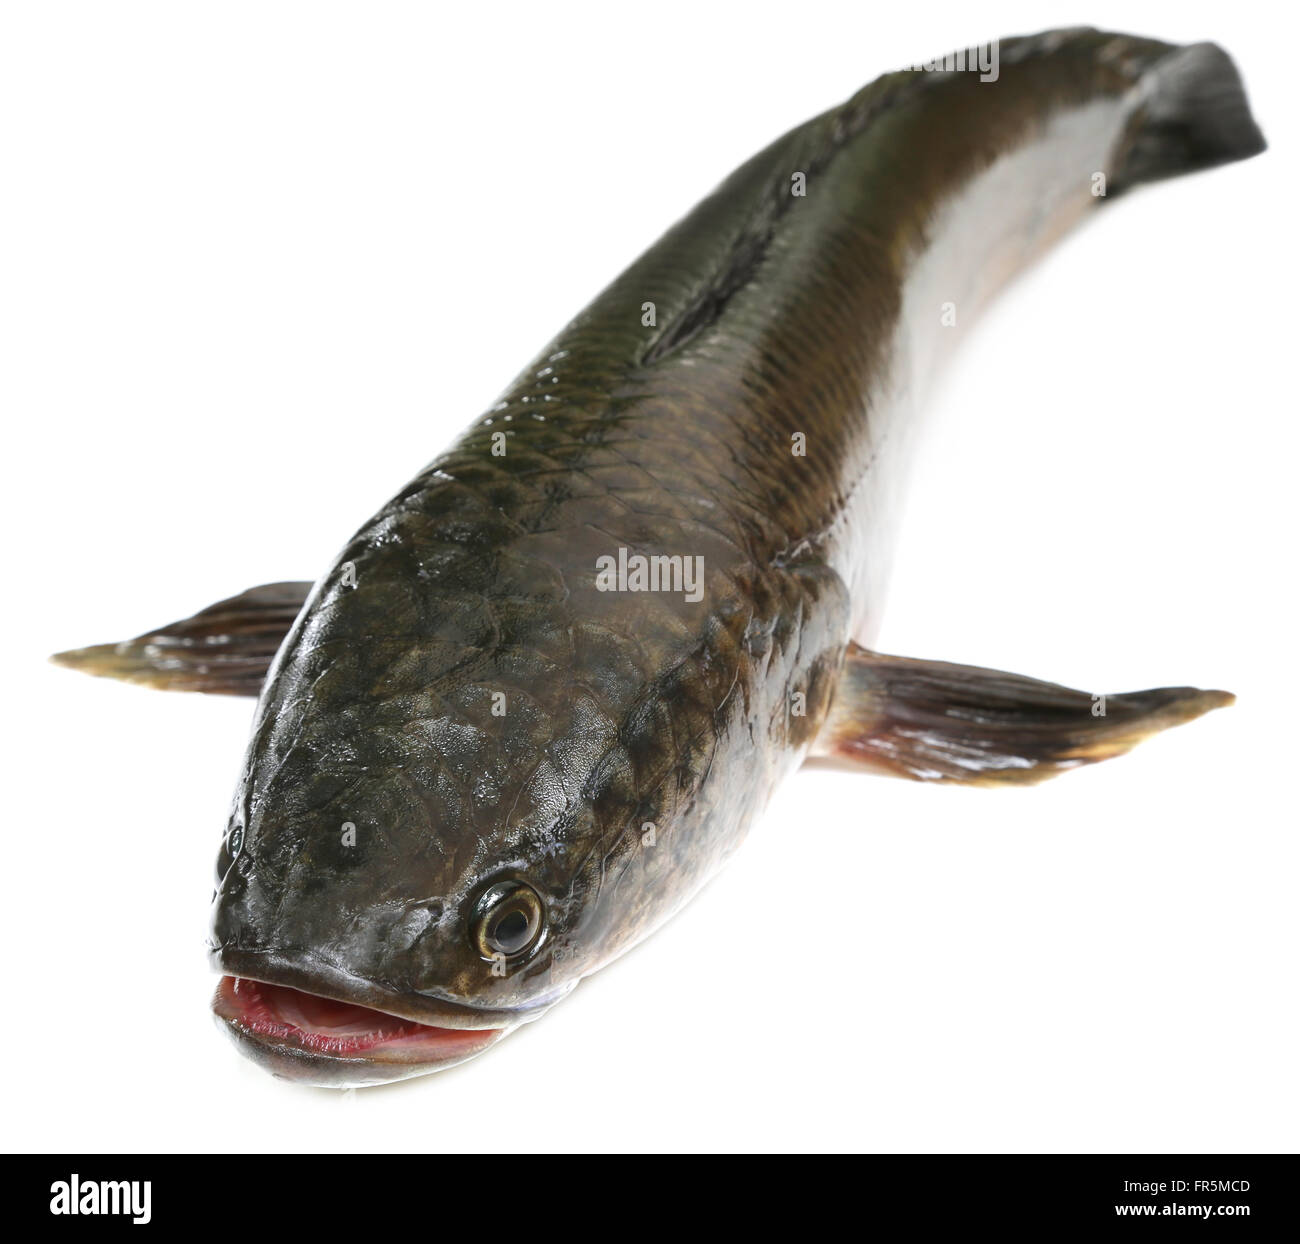 Channa marulius or Giant Snakehead known as gozar fish in Bangladesh Stock Photo